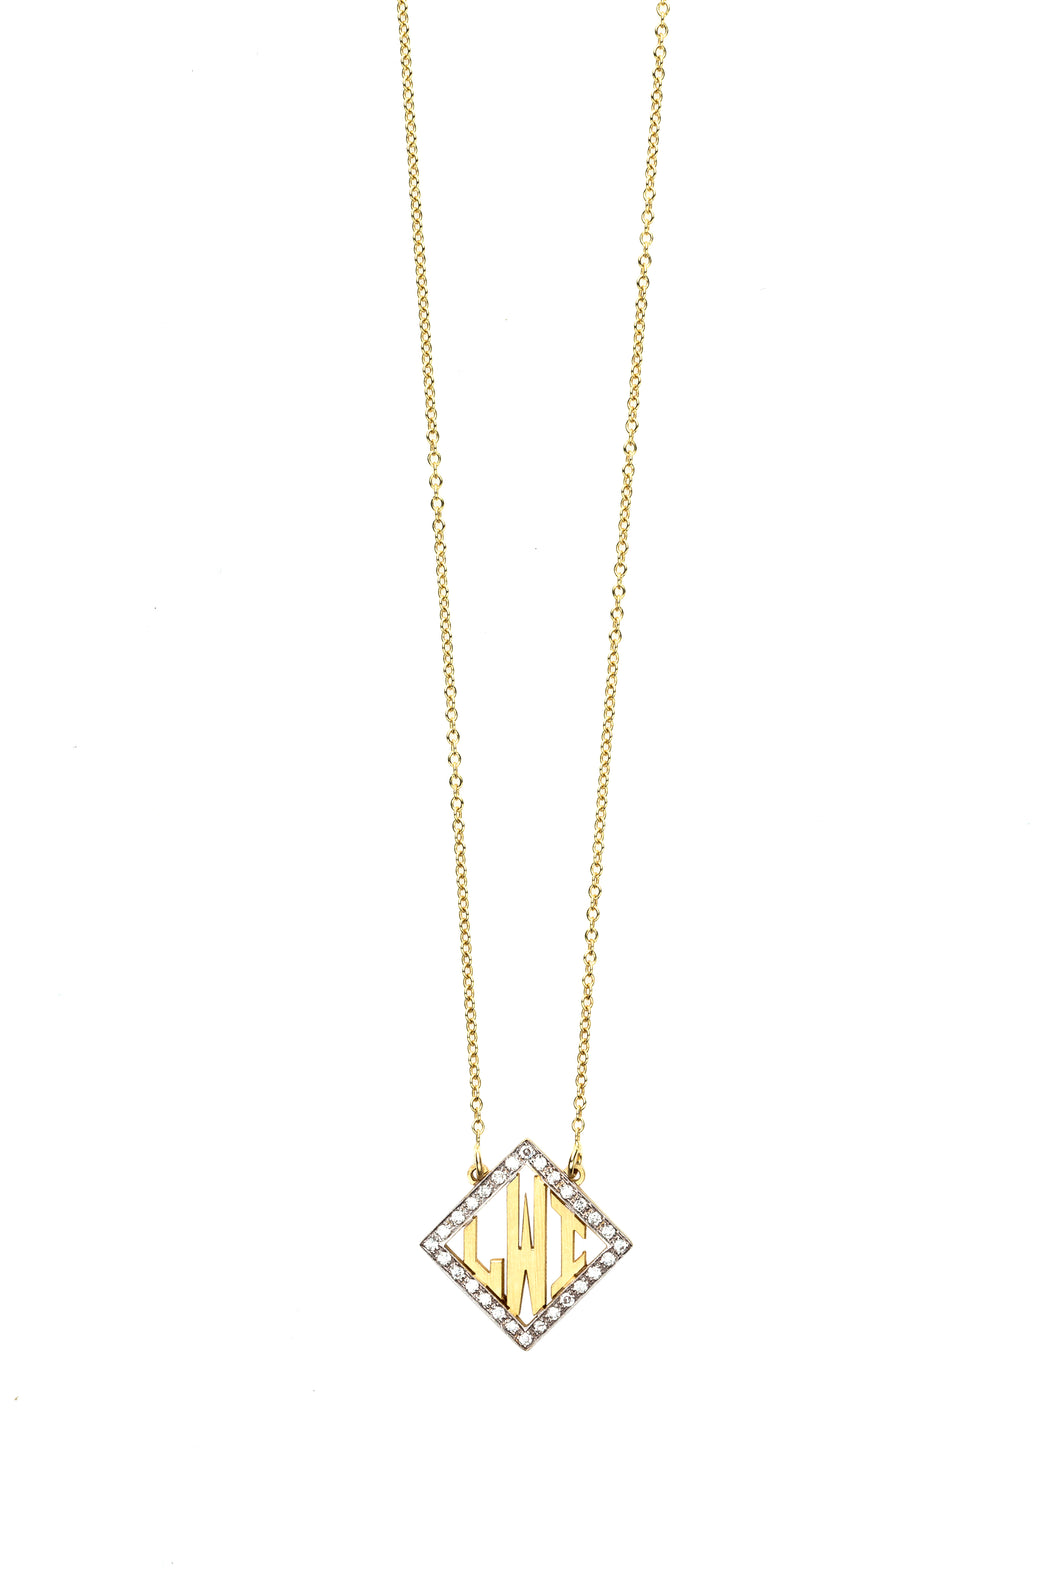 Block Letter Diamond Shape Monogram Small | Kacey K Jewelry.